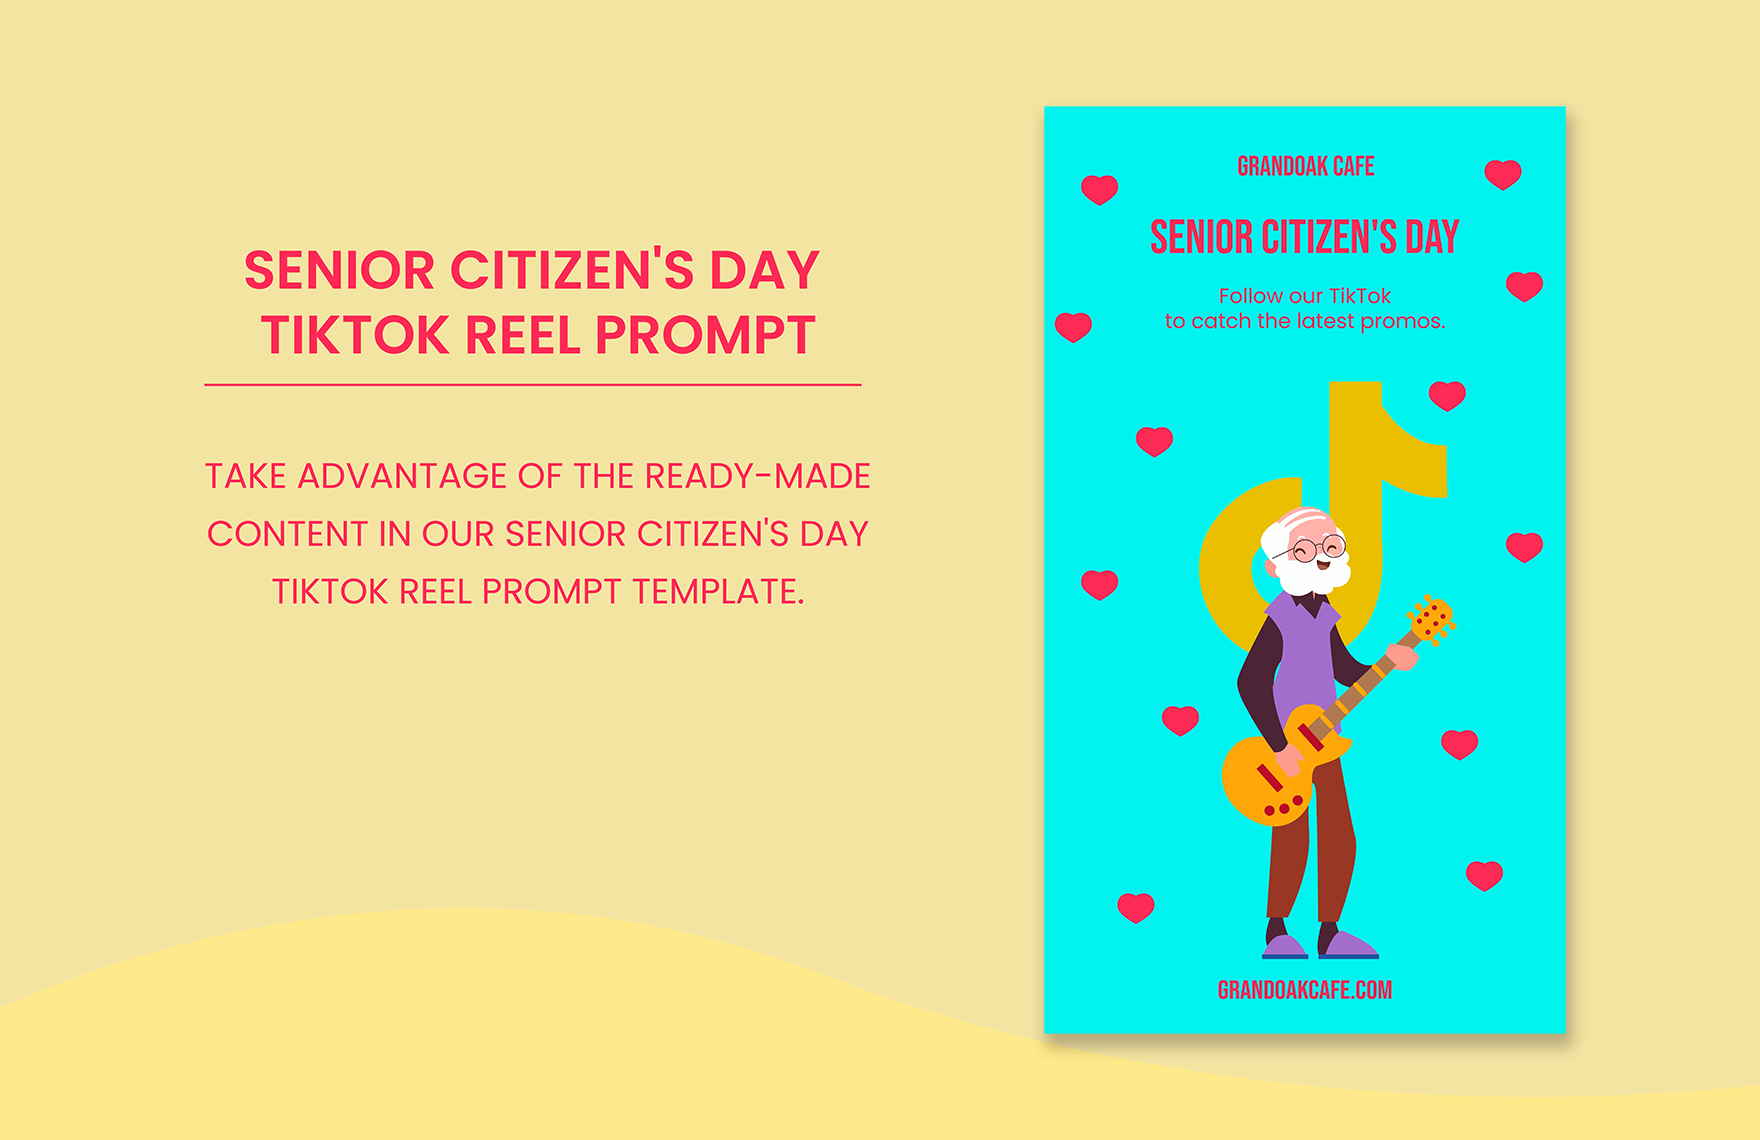 Free Senior Citizen's Day Tiktok Reel Prompt Template in PDF, Illustrator, SVG, PNG